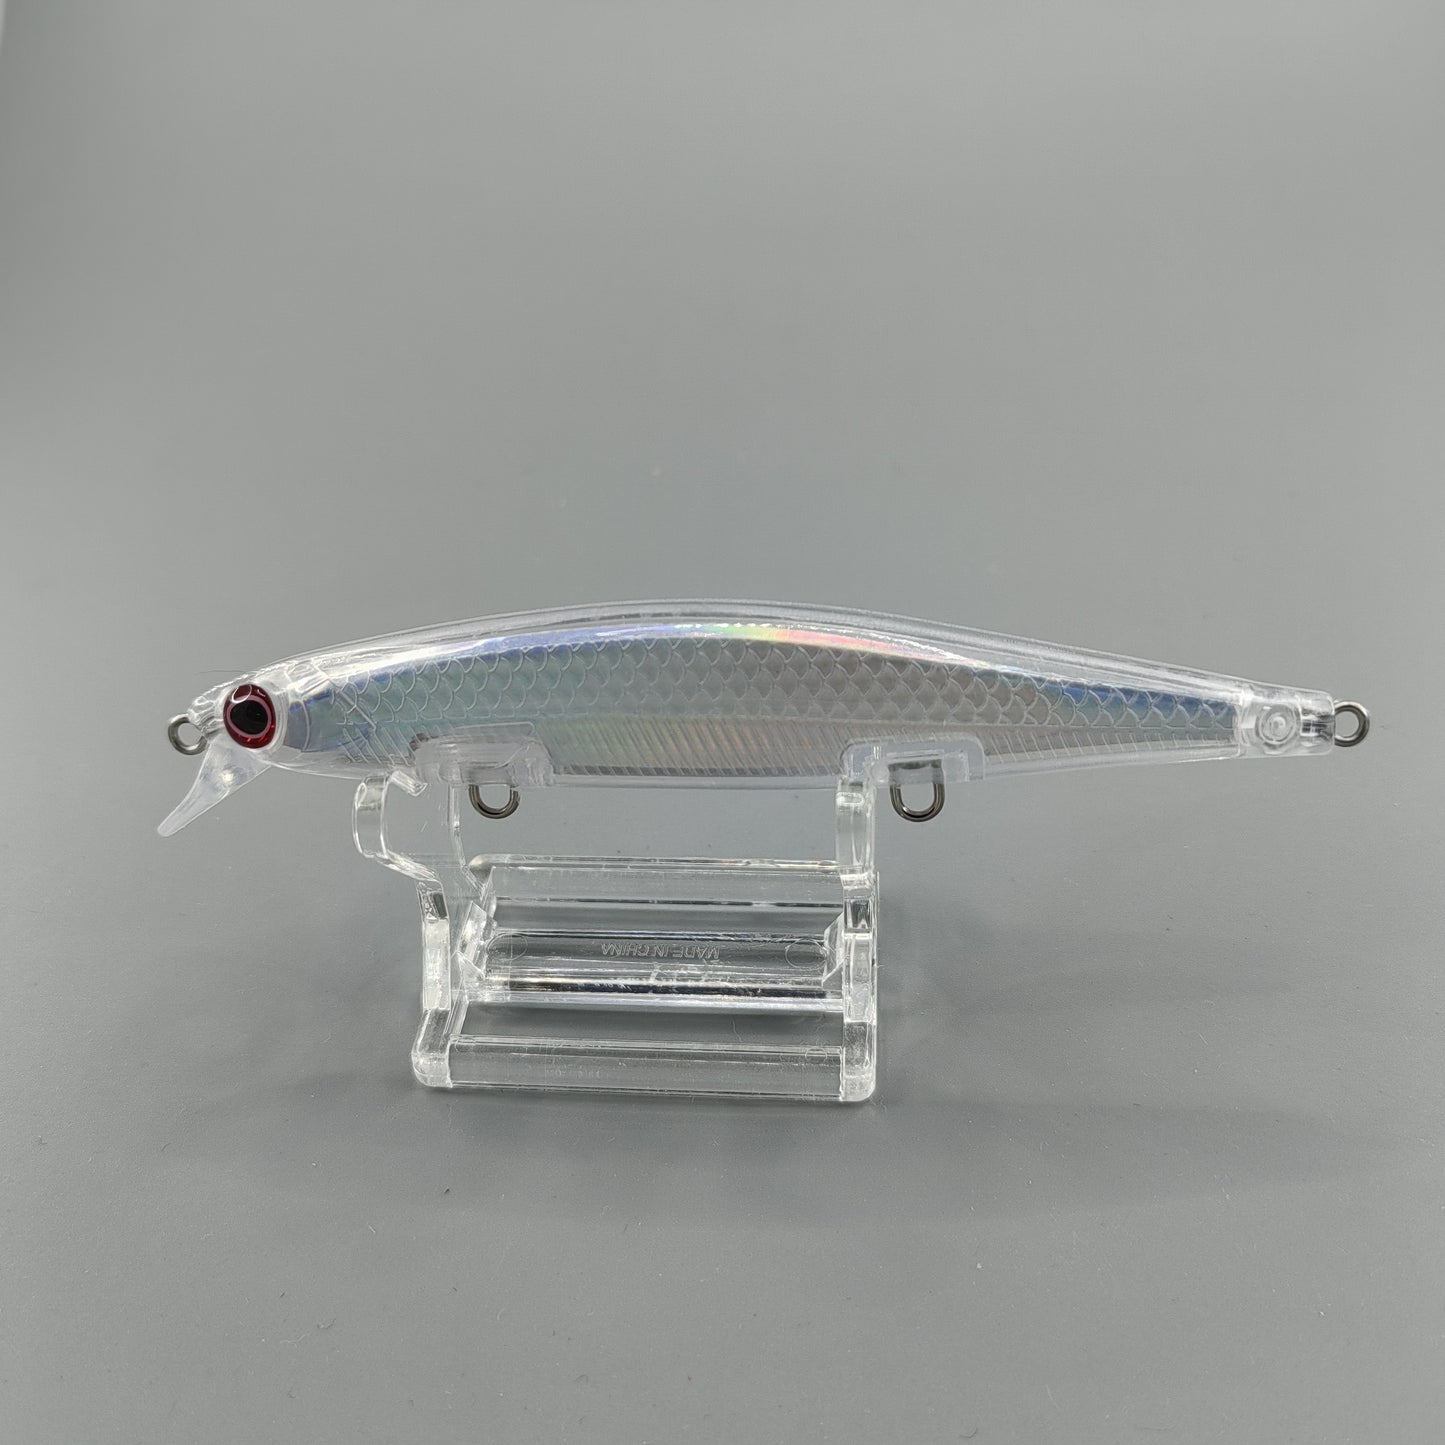 M013 110mm 10.8g Unpainted Minnow Plastic Fishing Lure Blank